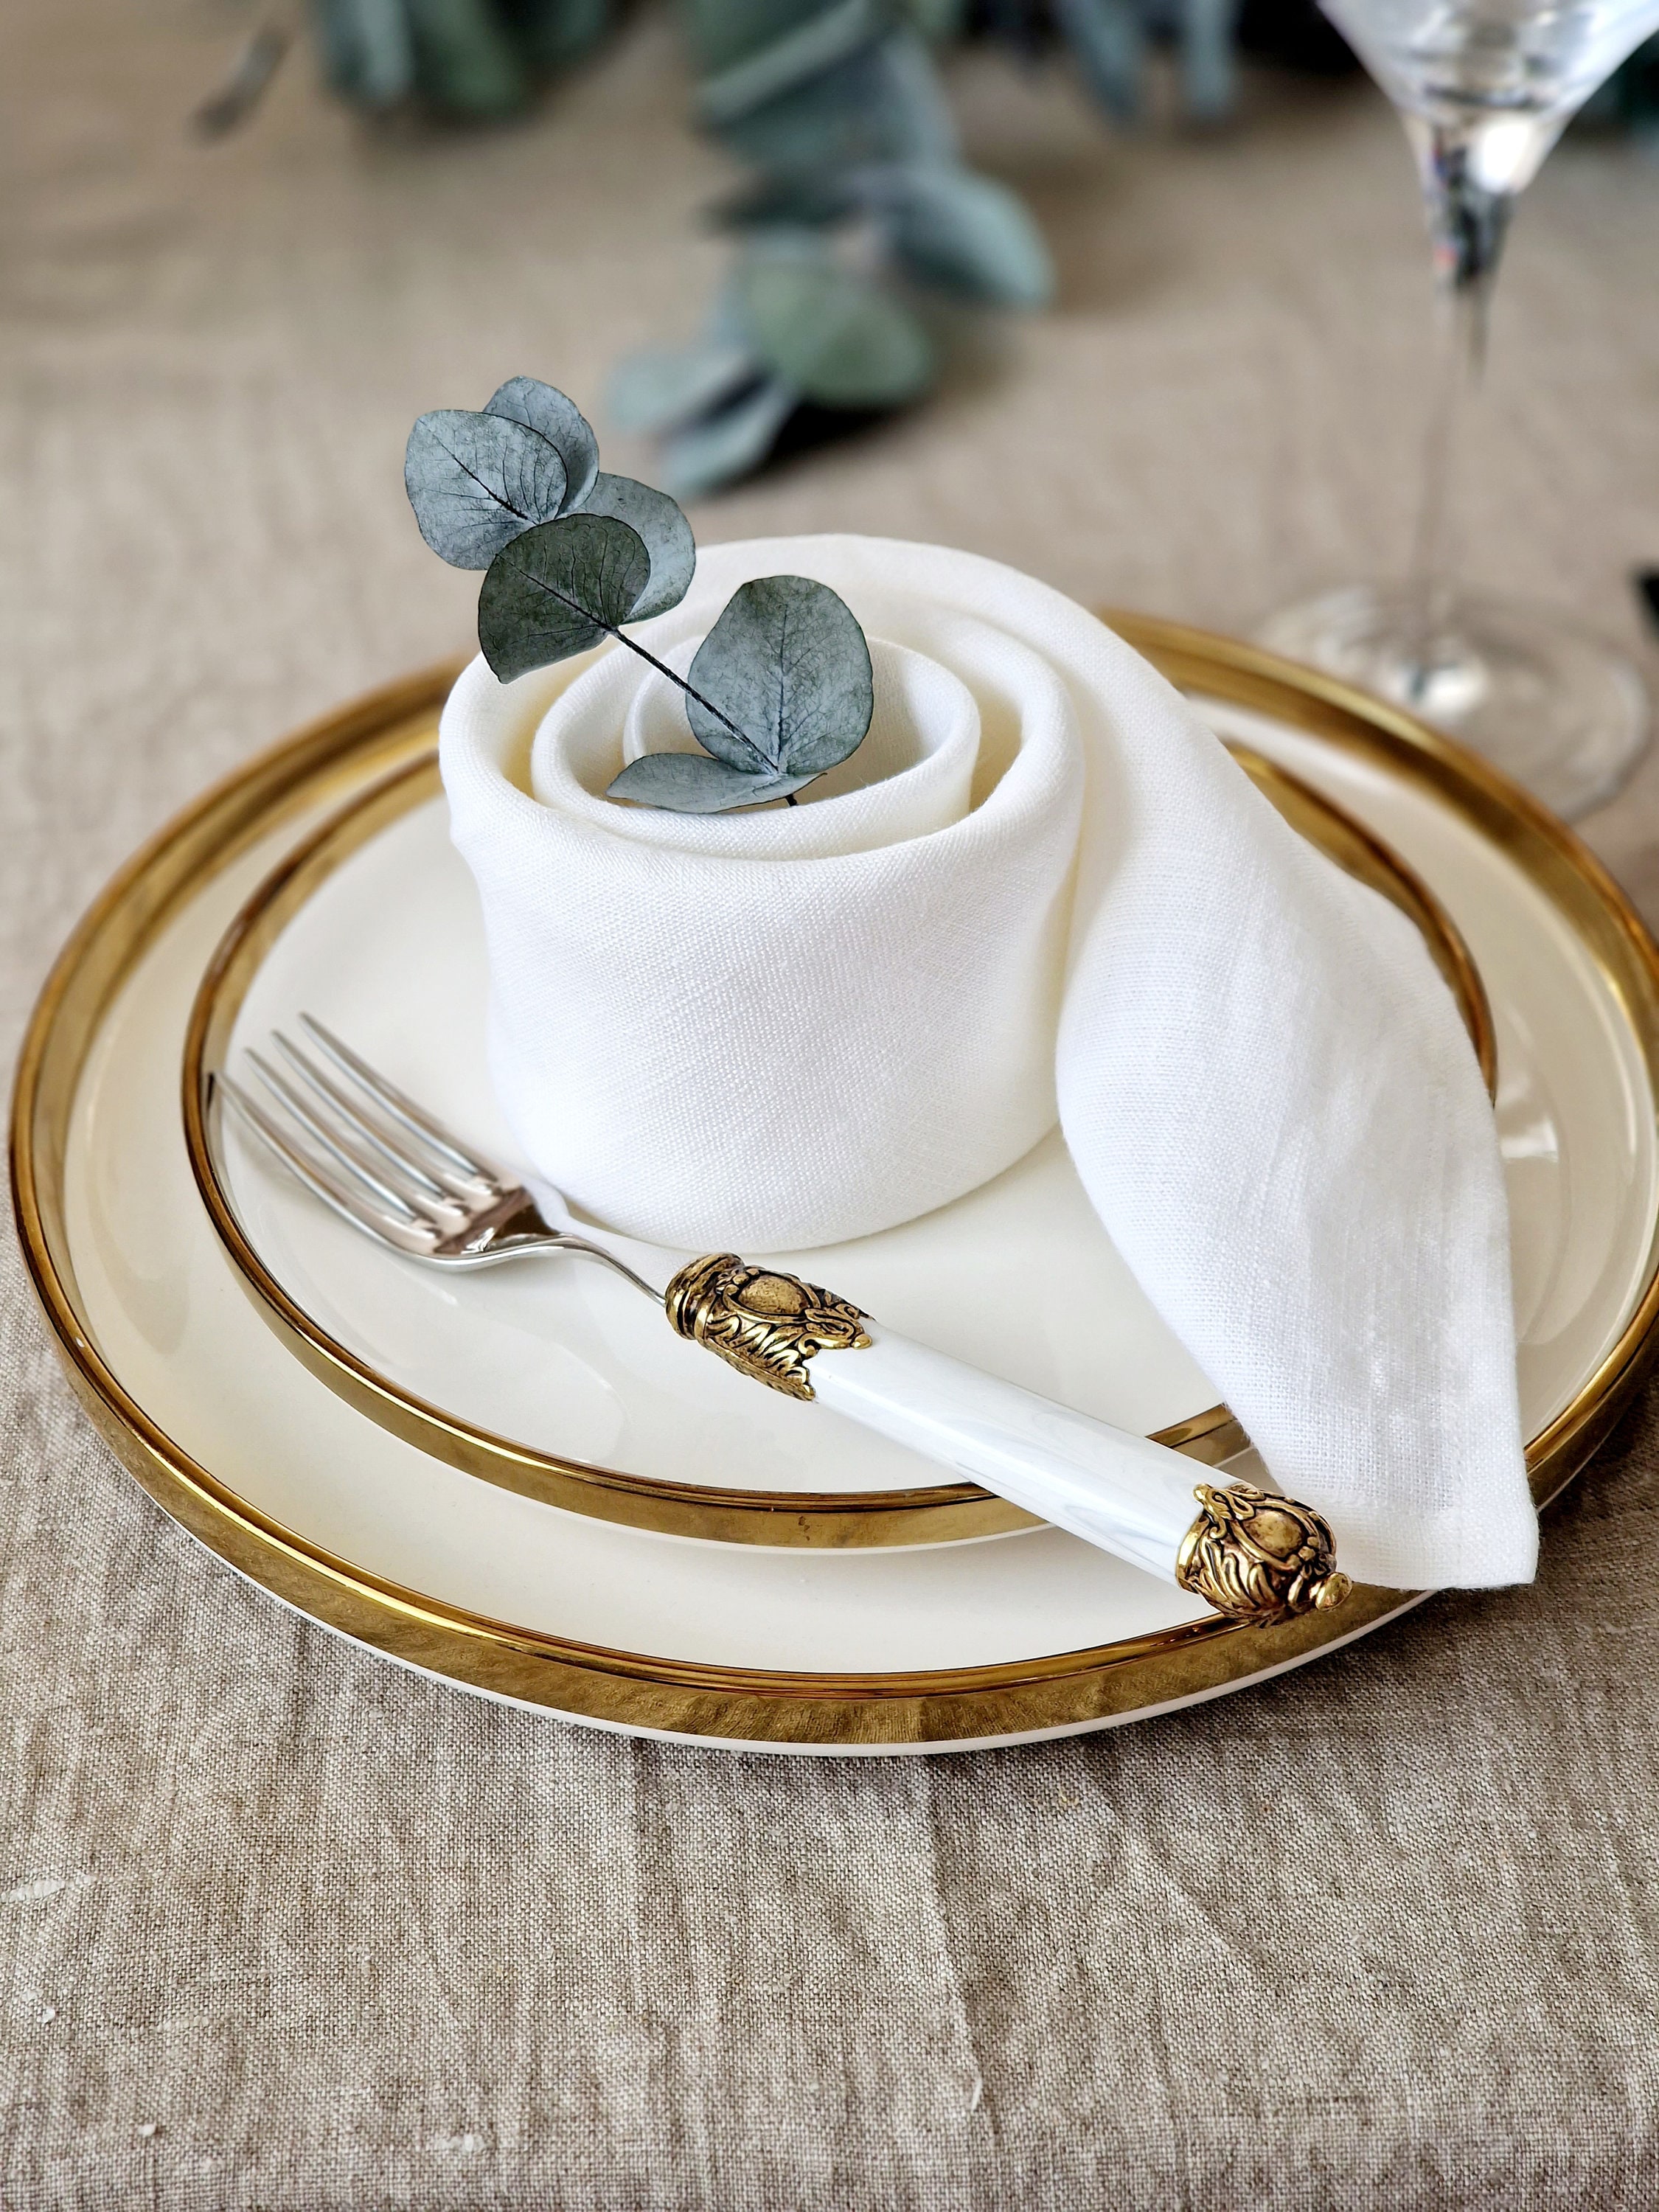 Linen Ruffle Napkins IRIS Natural Stonewashed Exquisite Linen Napkins.  Washed Soft Linen Table Elegant Napkins. Handmade Table Decor 